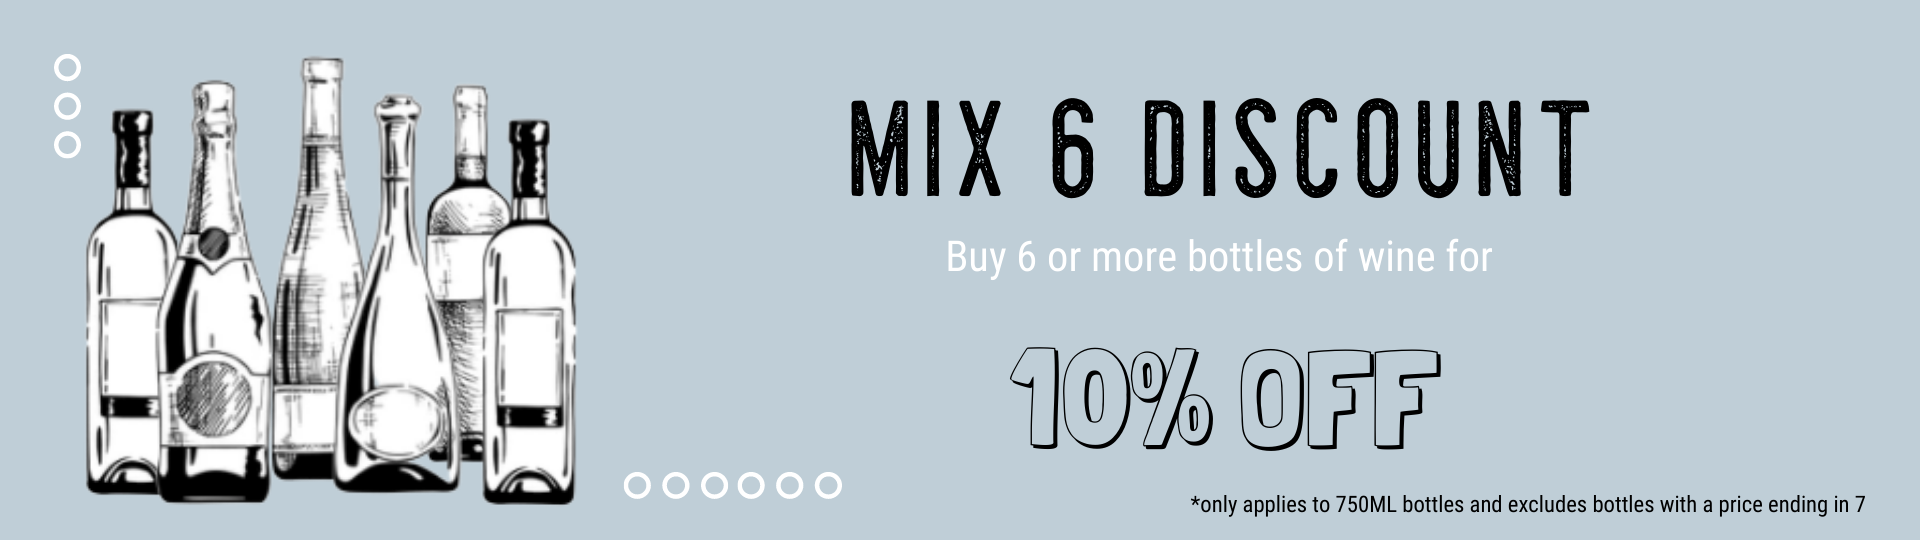 Mix 6 Discount